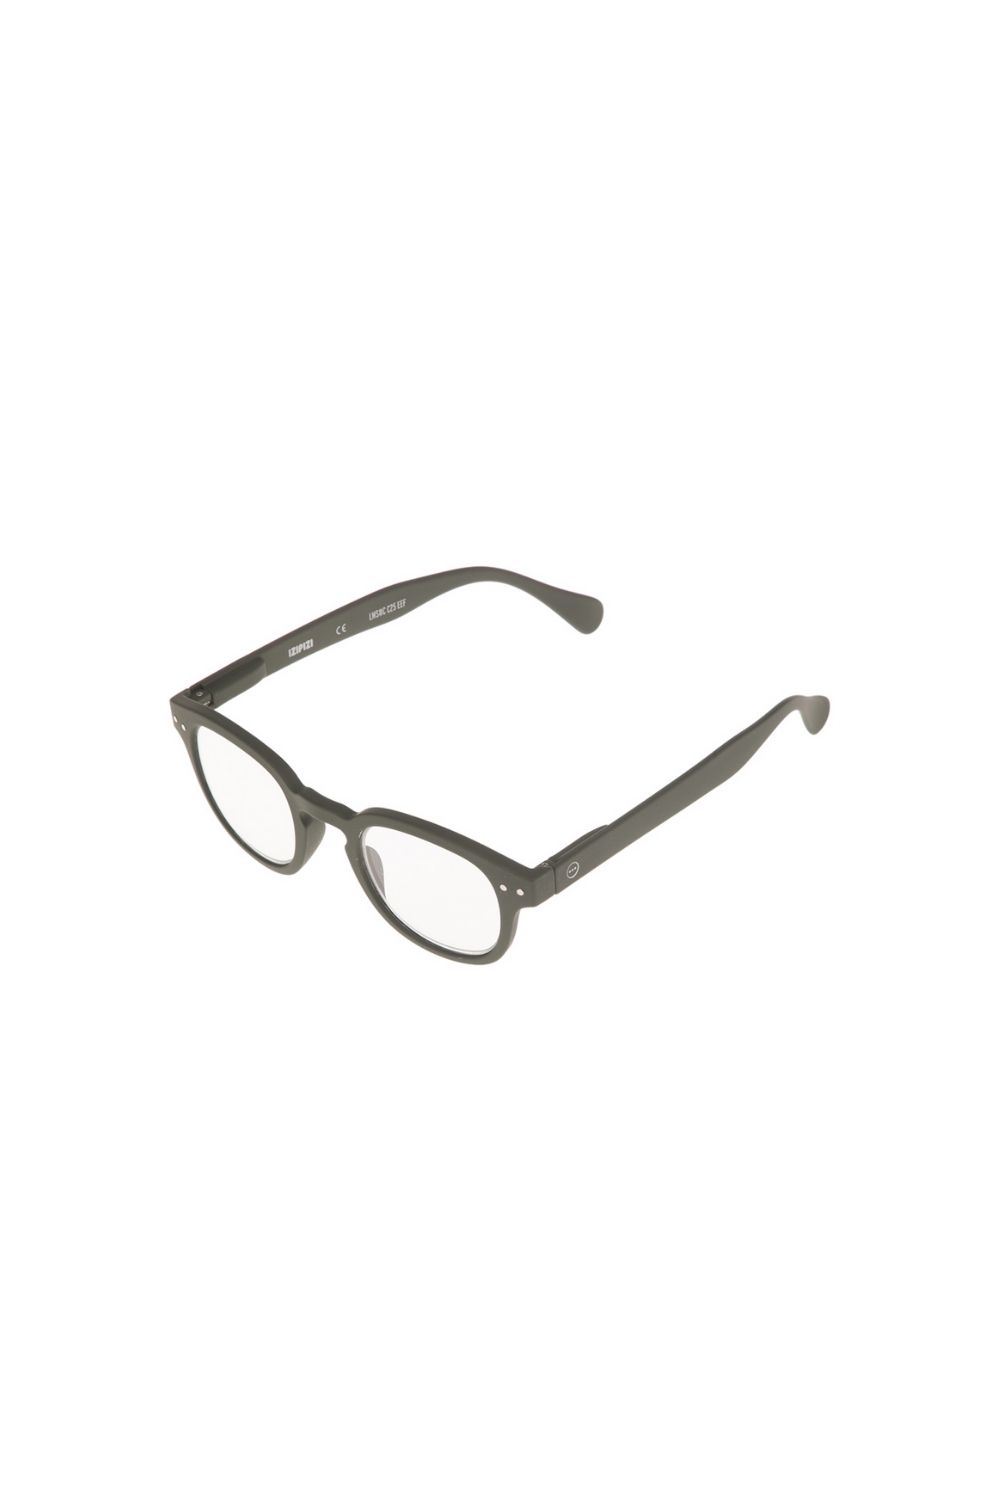 IZIPIZI - Unisex γυαλιά οράσεως IZIPIZI READING #C χακί Γυναικεία/Αξεσουάρ/Γυαλιά/Οράσεως